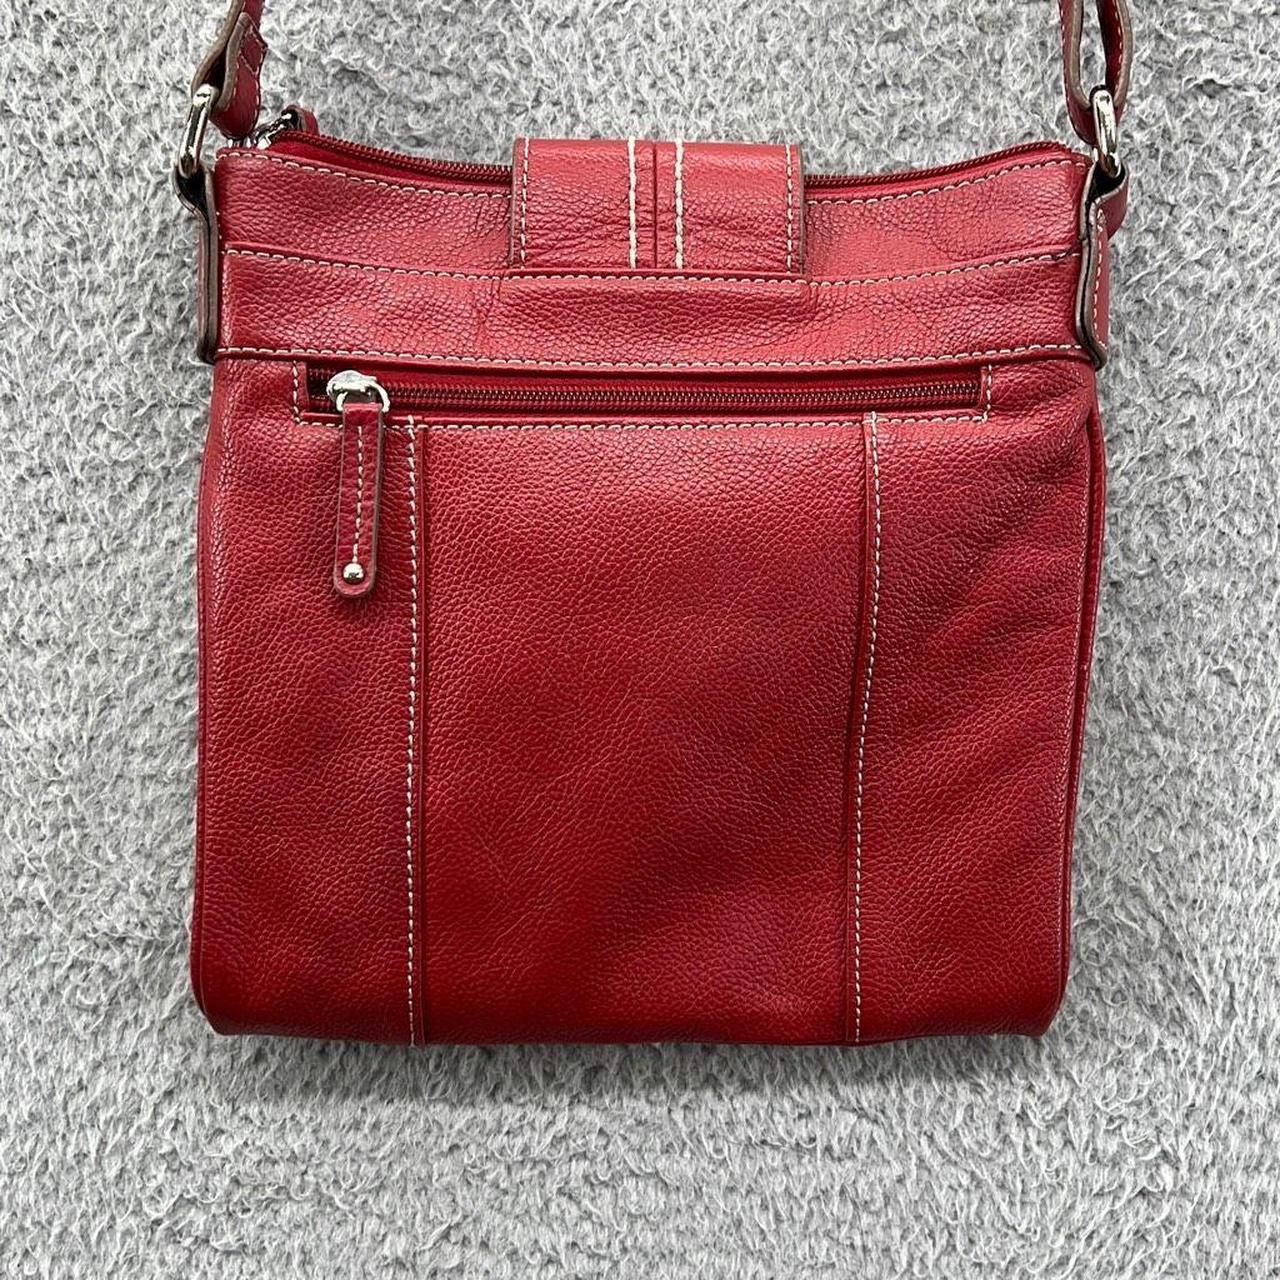 Buy Tignanello X-Body N/S Flap Shoulder Bag,Chamois, at Amazon.in